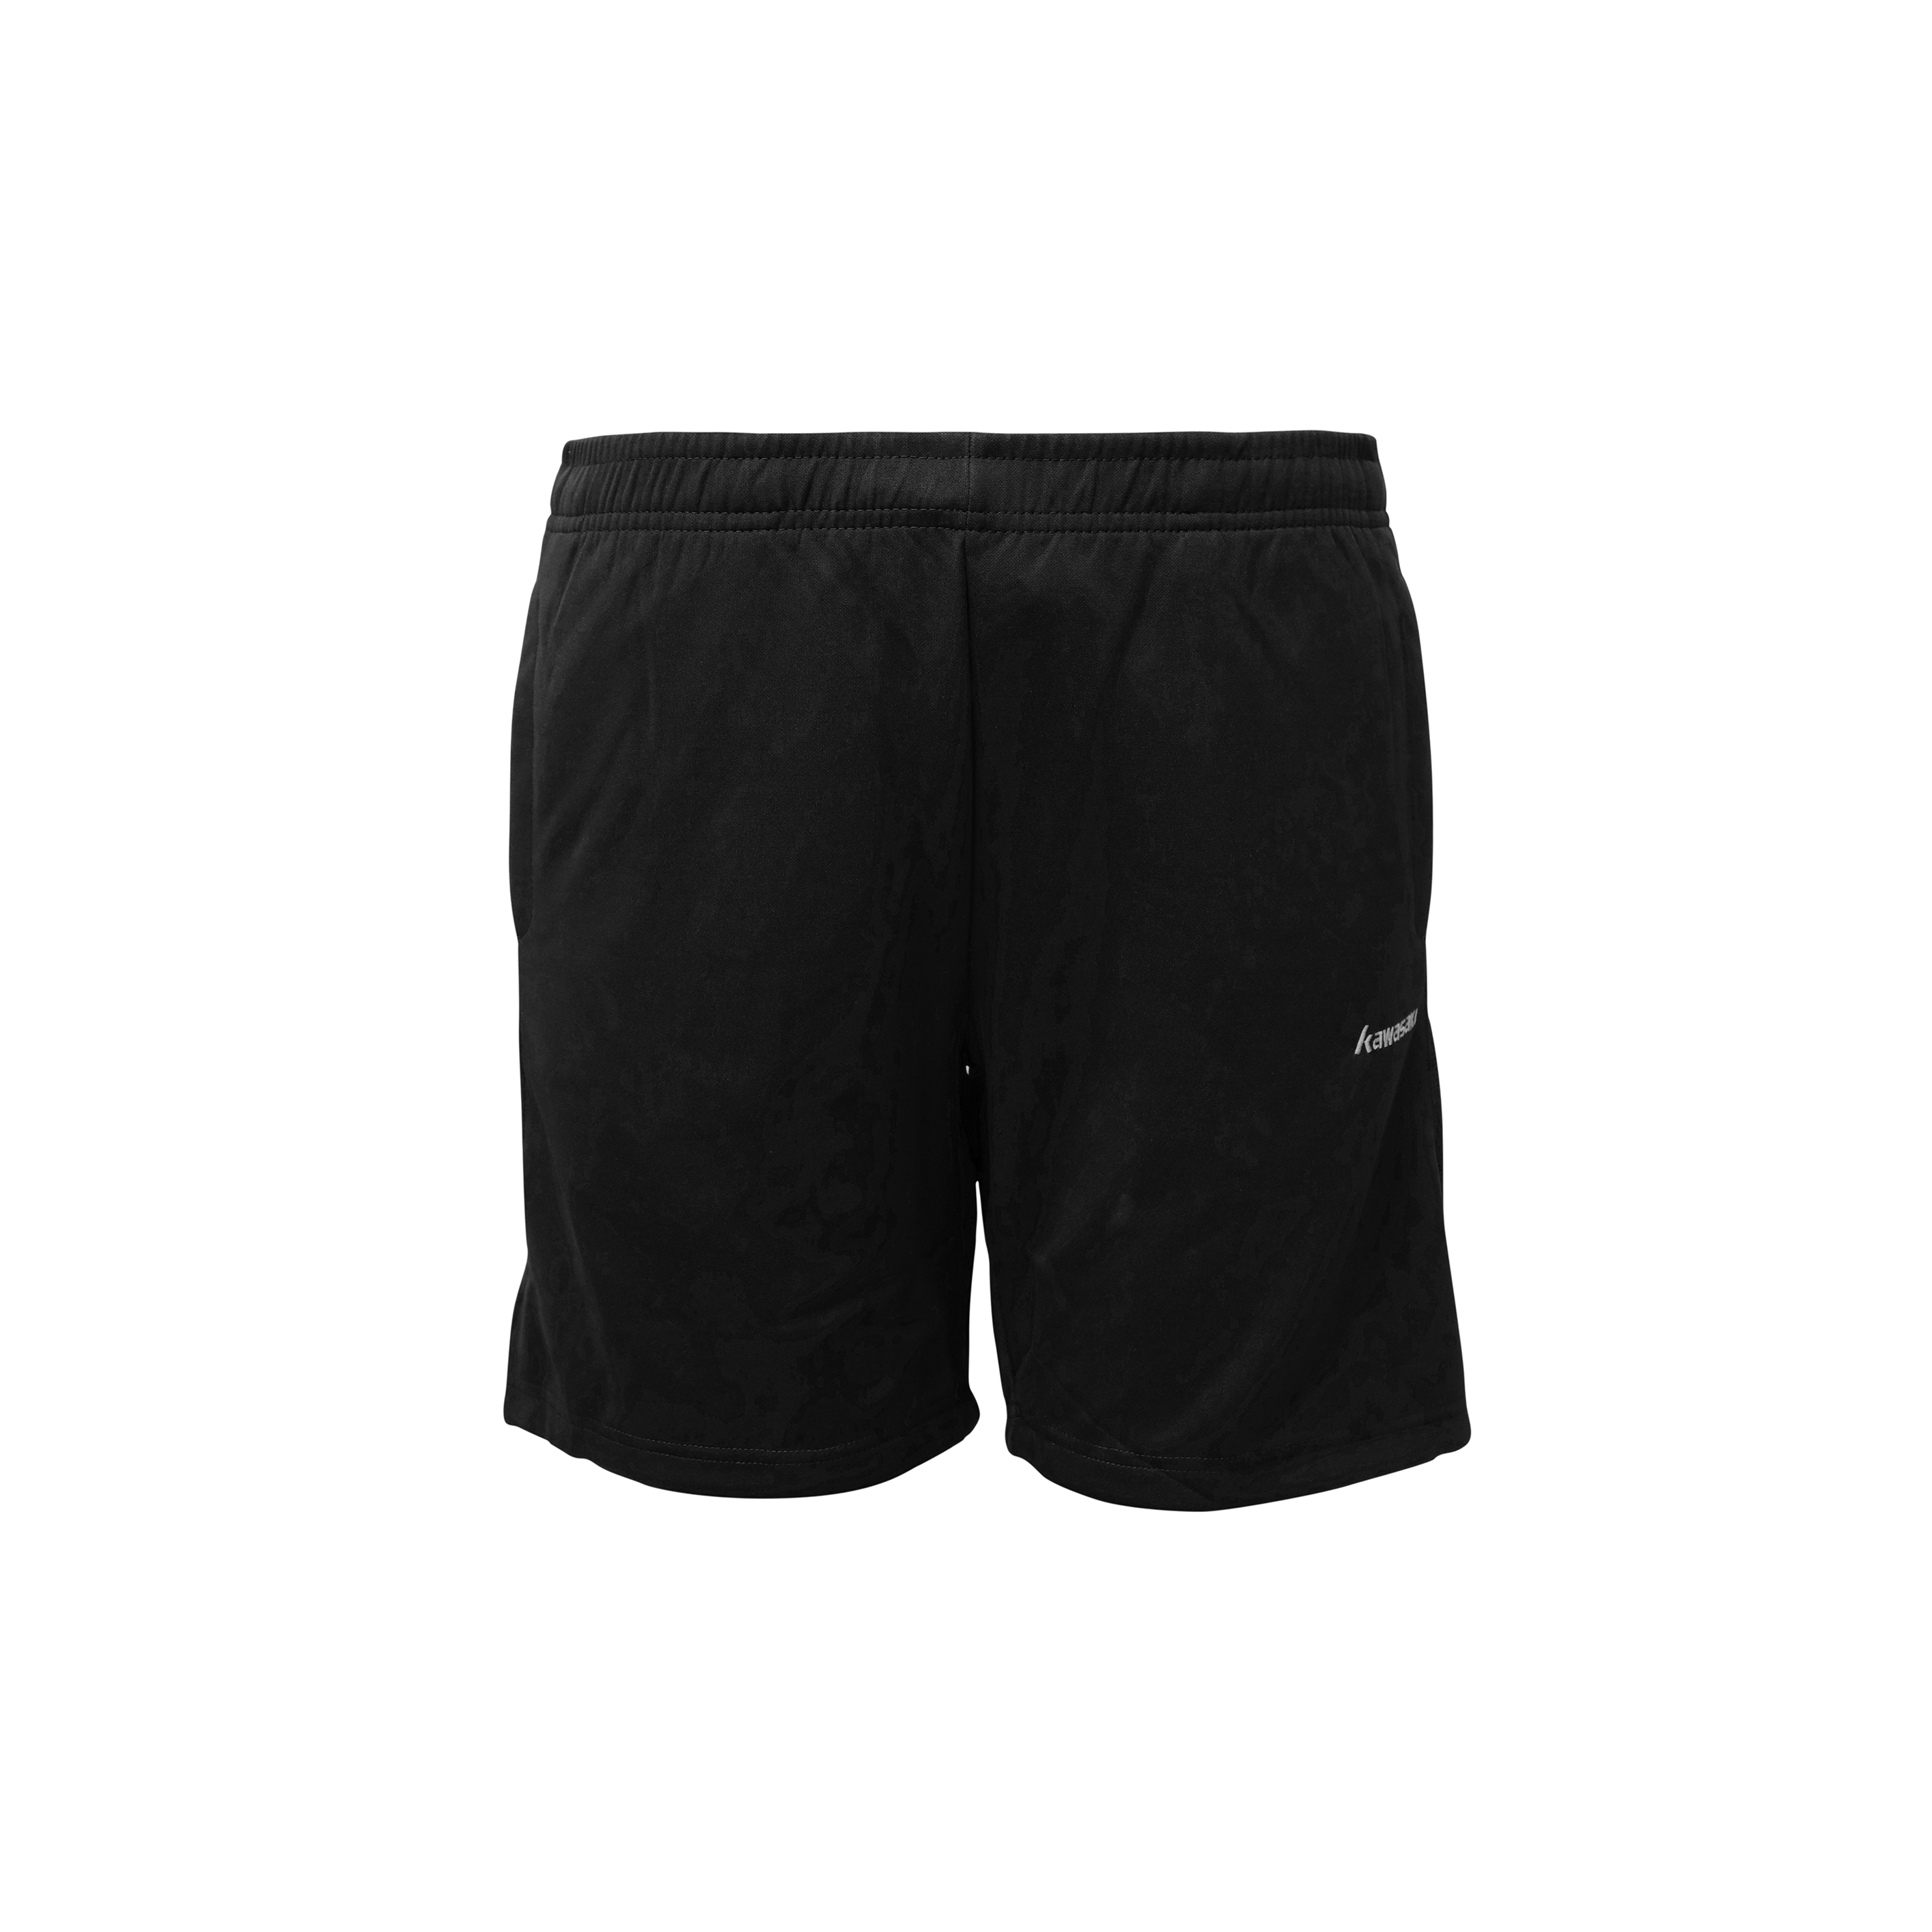 SP-173603 Shorts (Black)